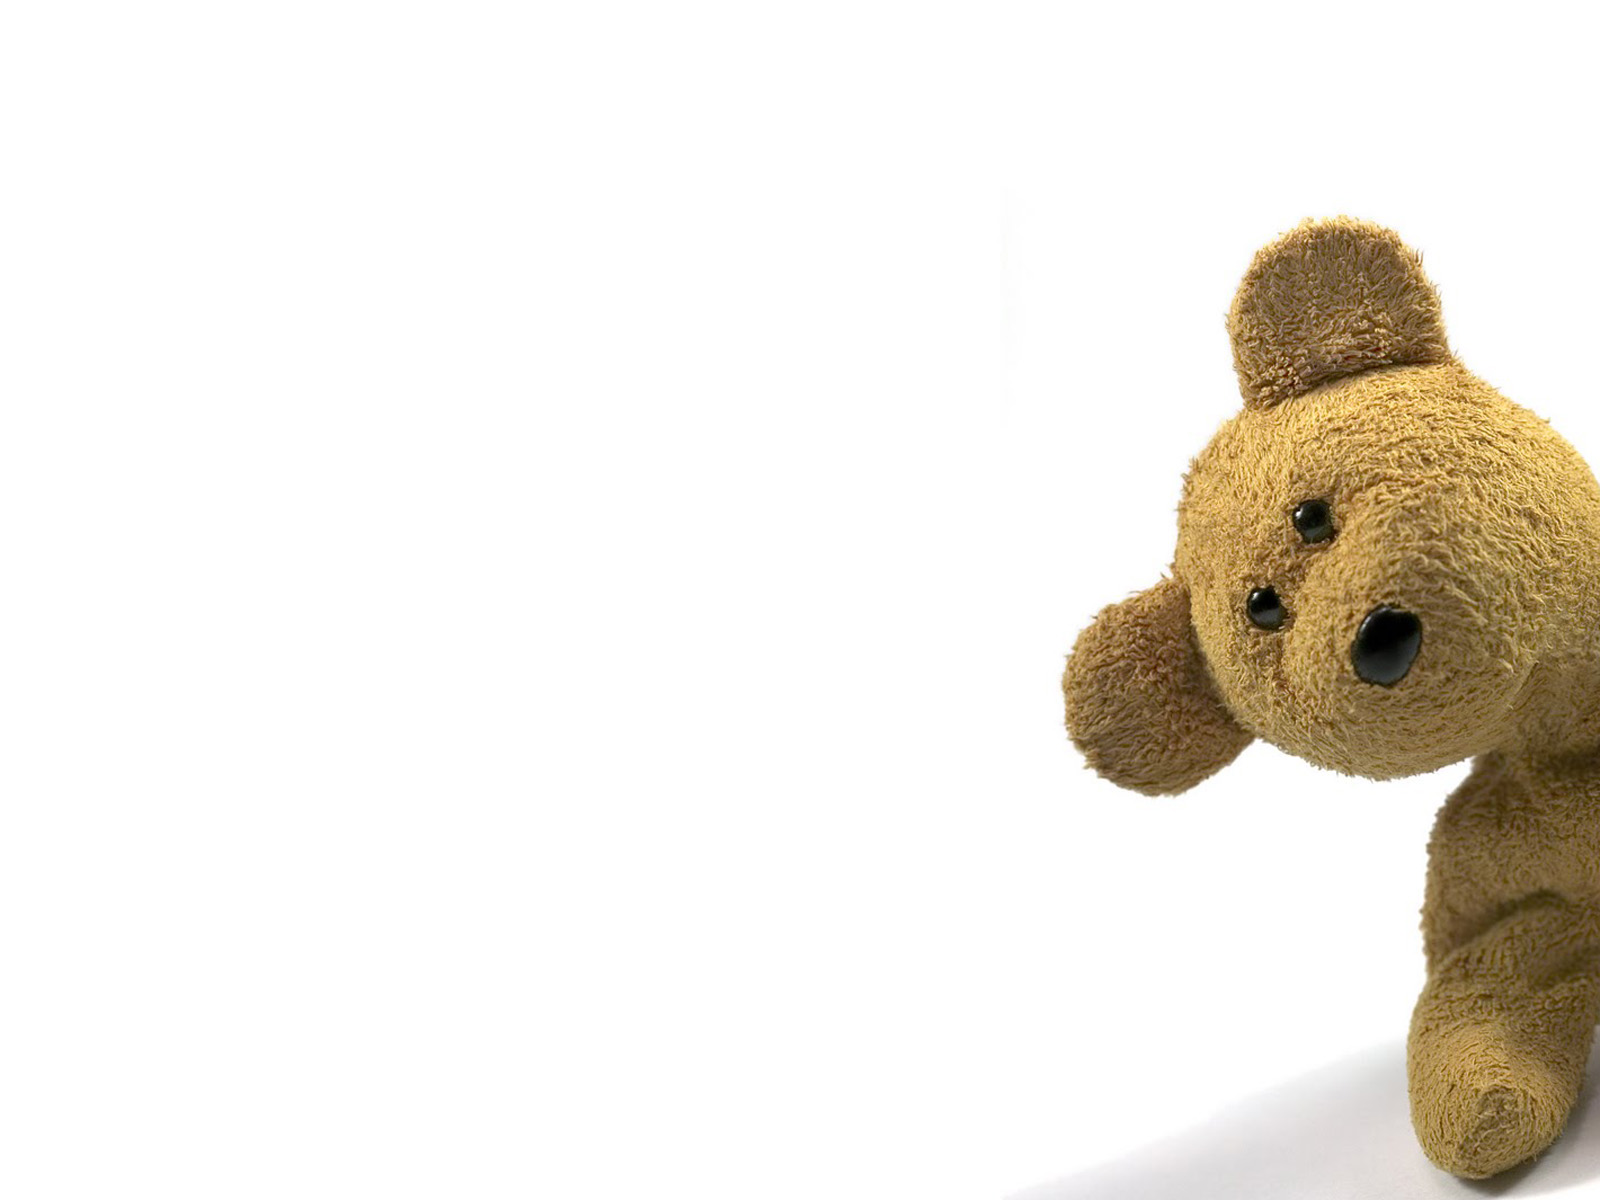 Wallpaper Funny Teddy Bears For Your Desktop Background